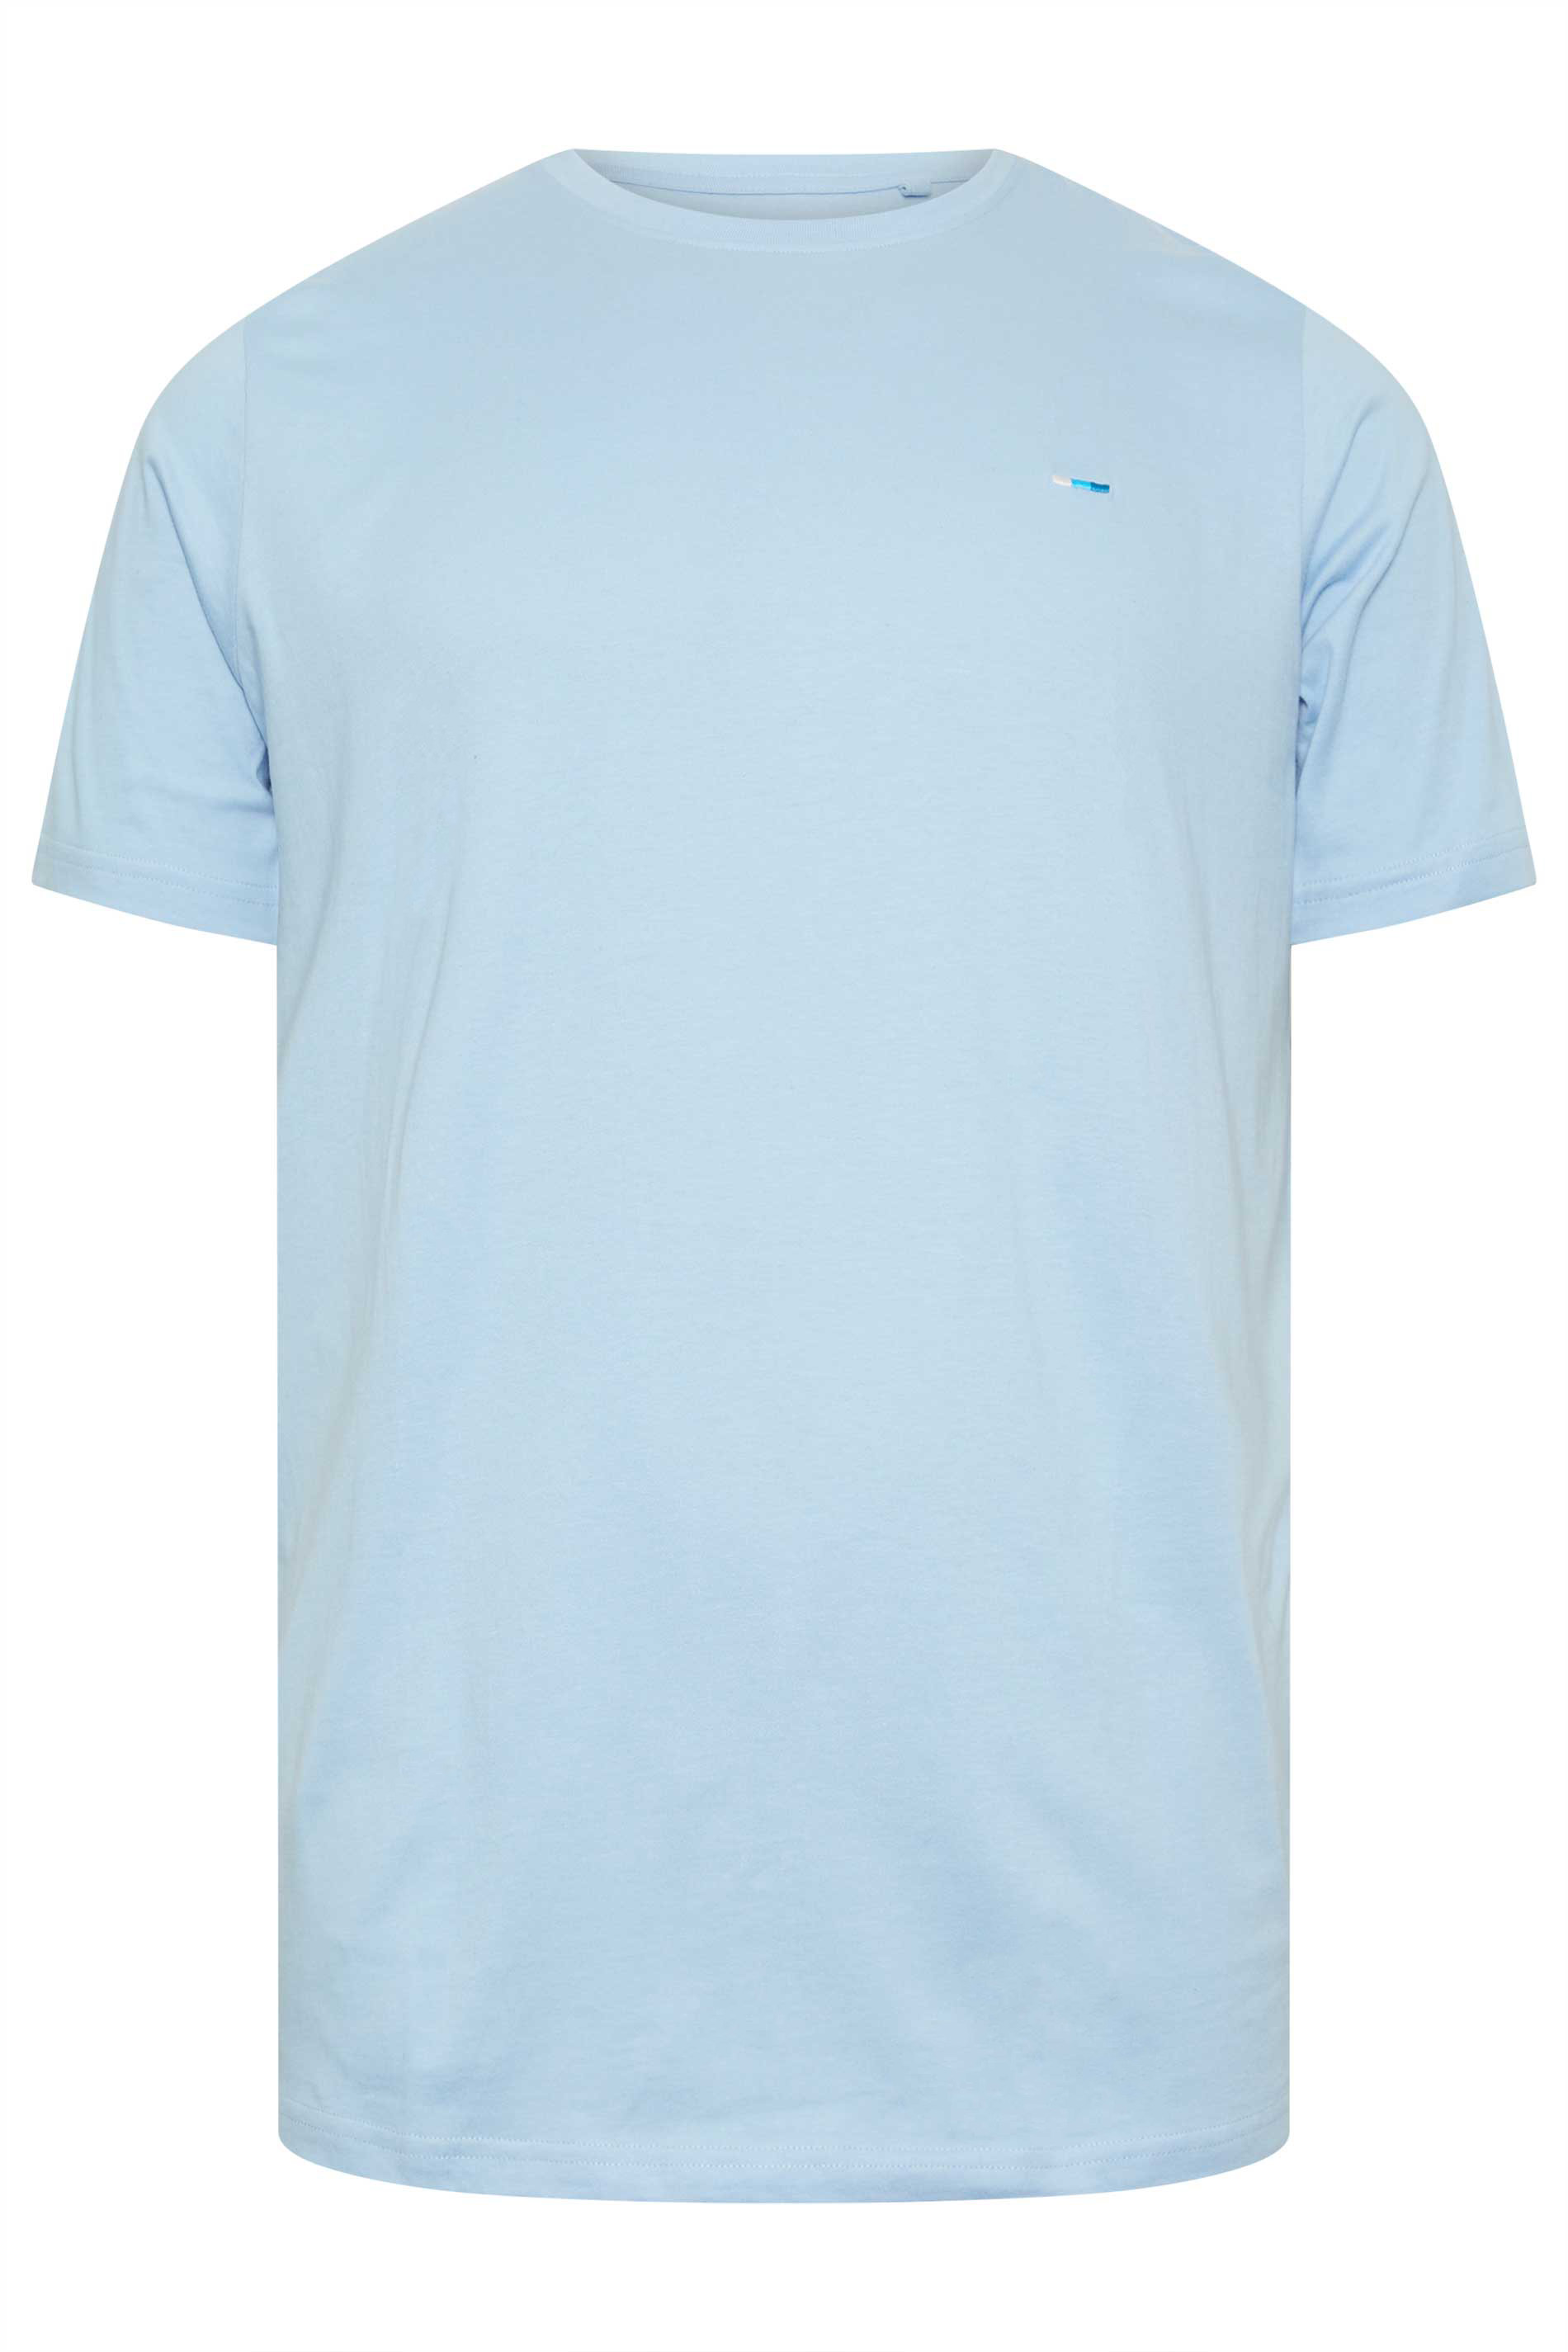 BadRhino Big & Tall Chambray Blue Core T-Shirt | BadRhino 2